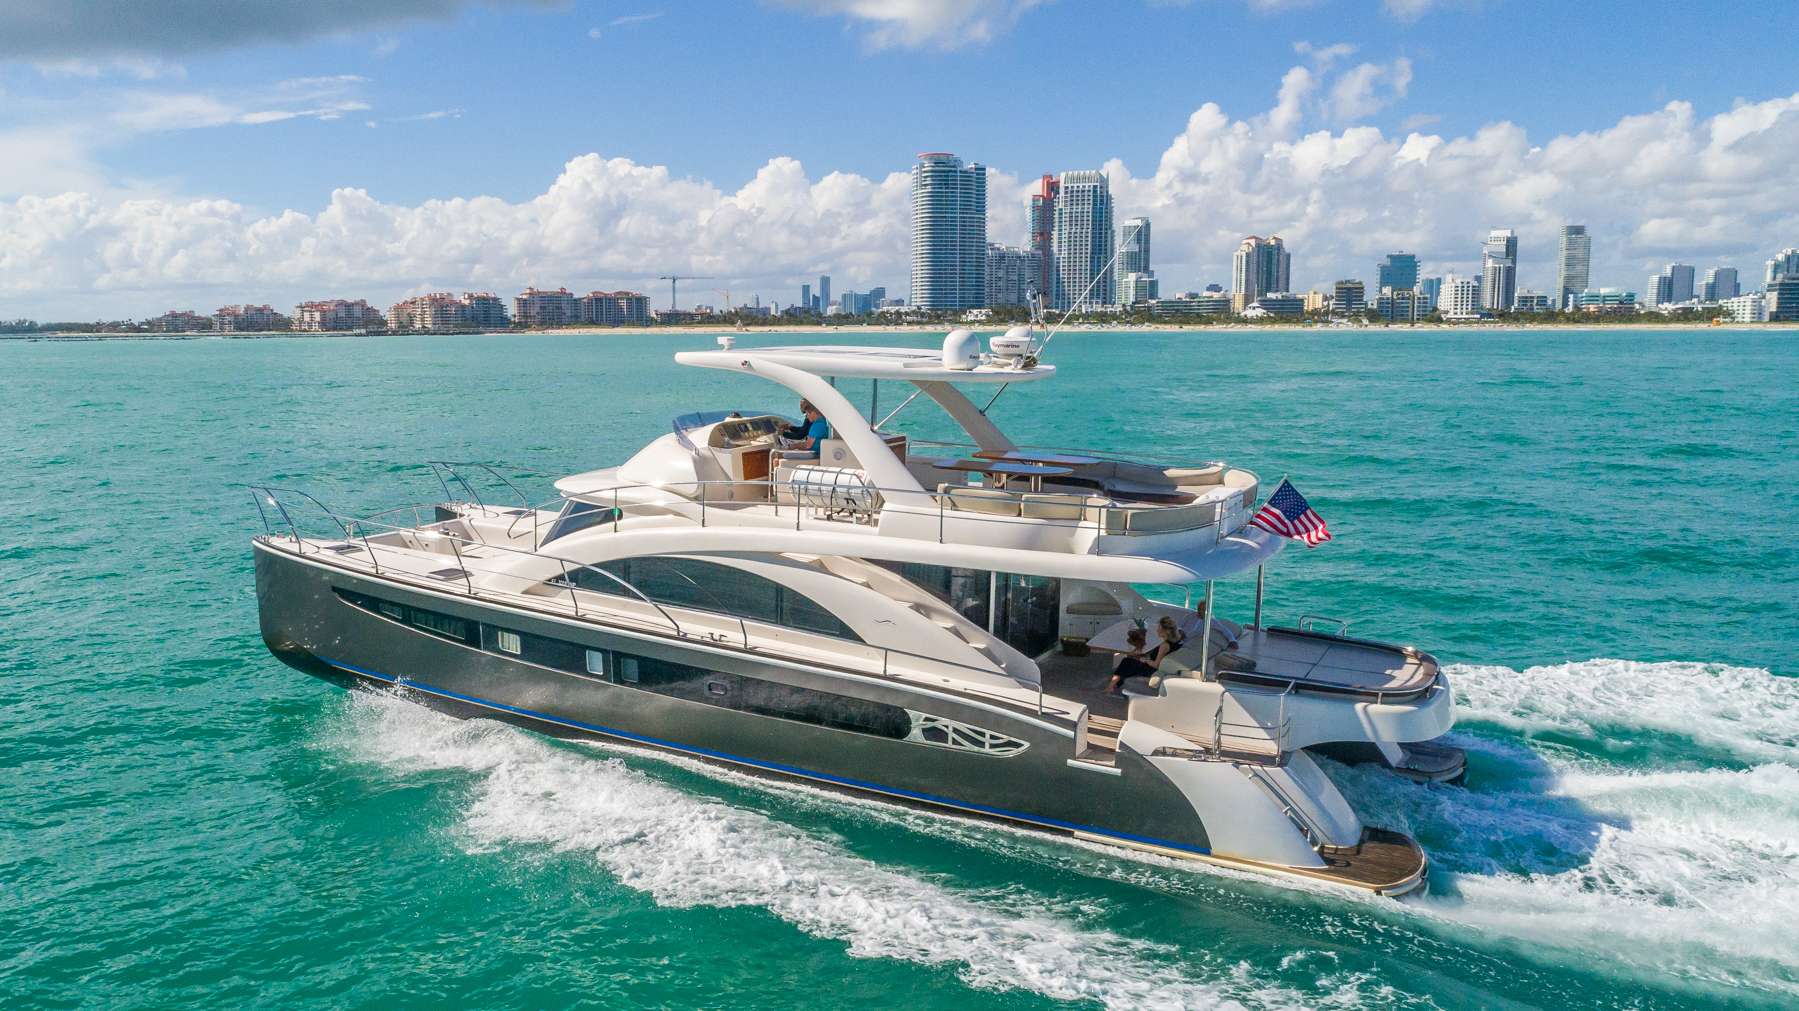 legend &amp; soul - Catamaran Charter USA & Boat hire in Florida & Bahamas 2